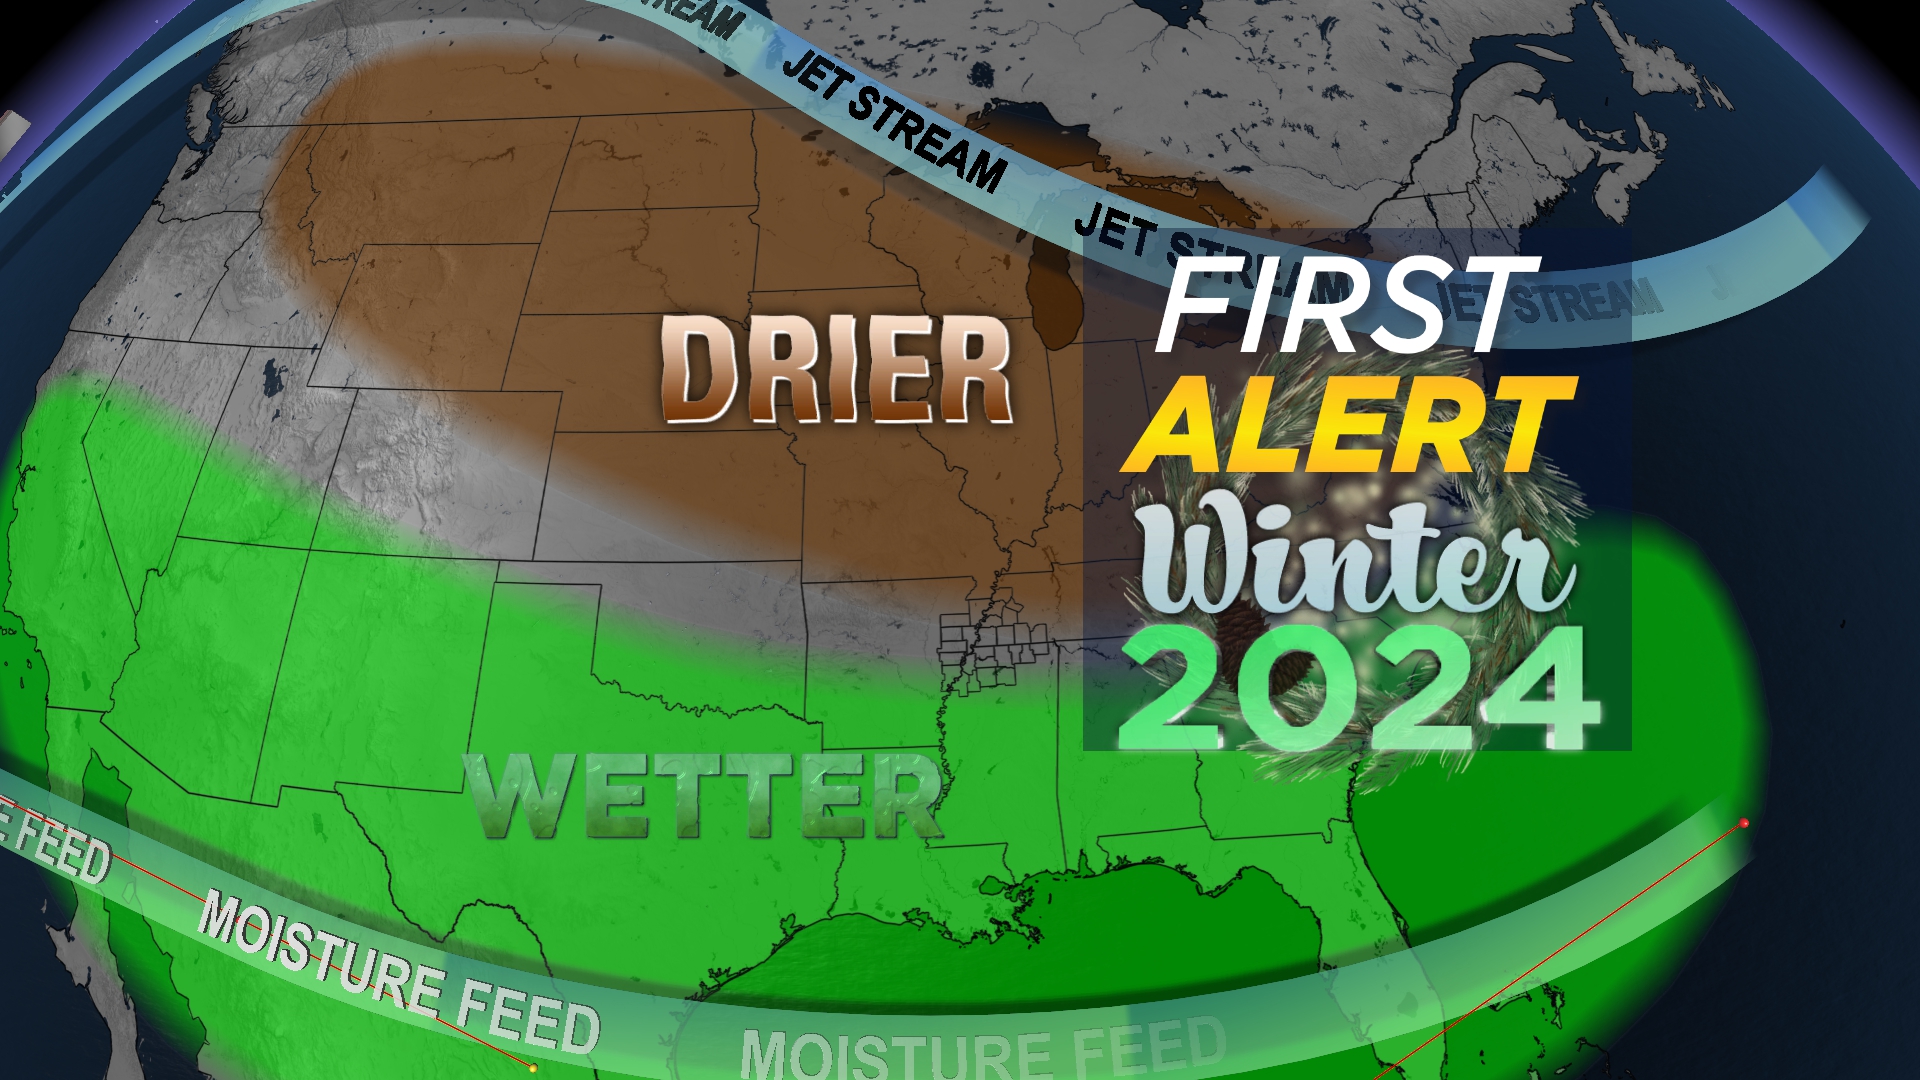 How El Niño and La Niña affect the winter jet stream and U.S.